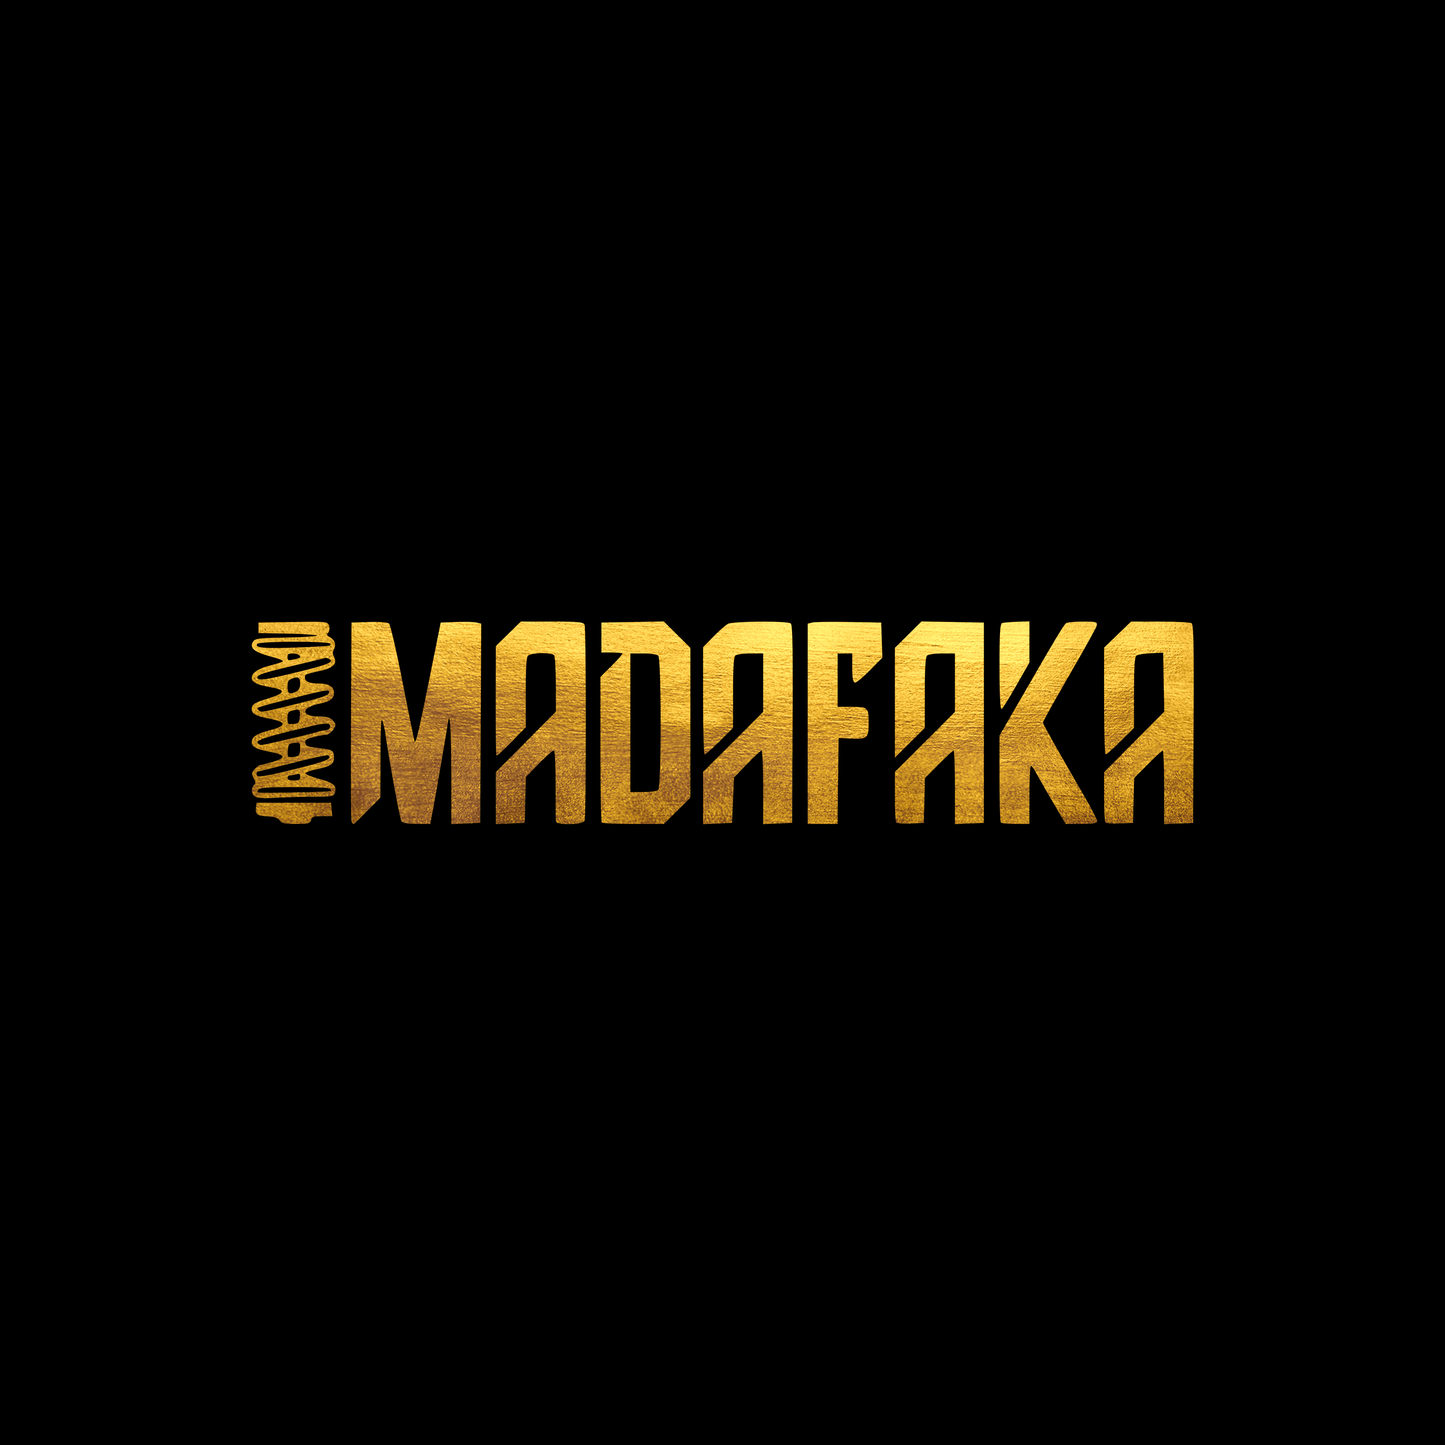 MADAFAKA sticker decal